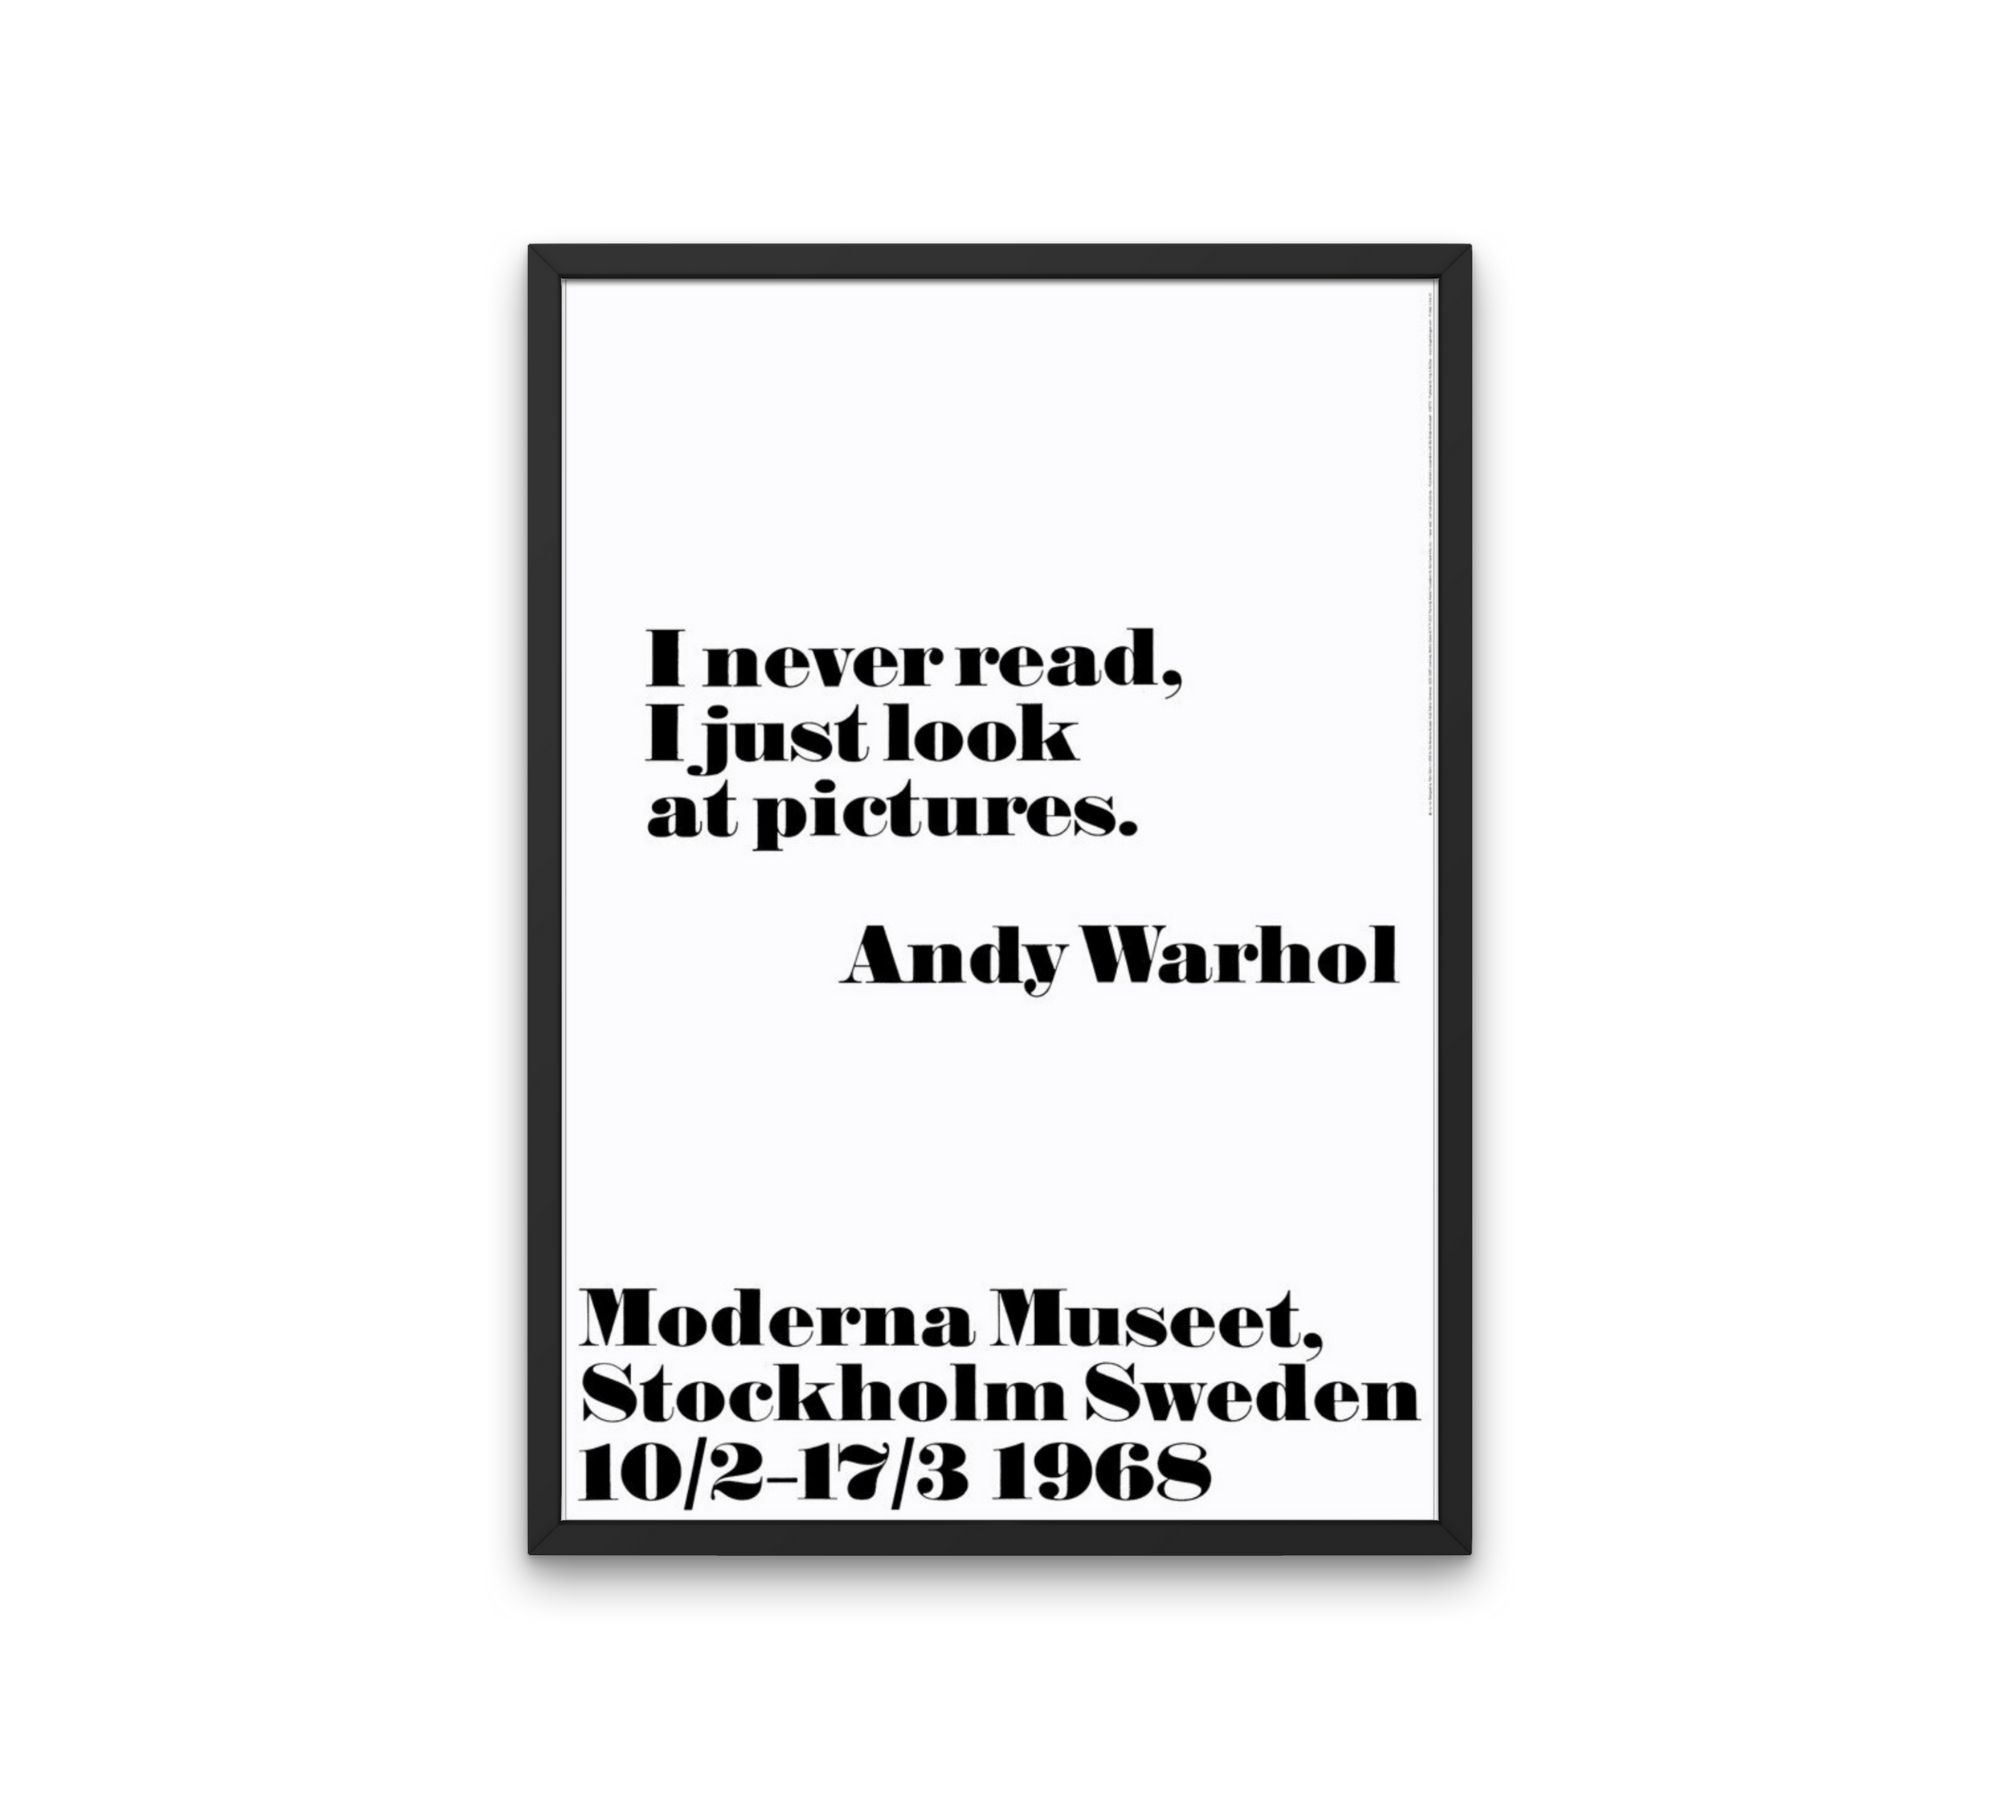 I never read - Andy Warhol 70 x 100 cm